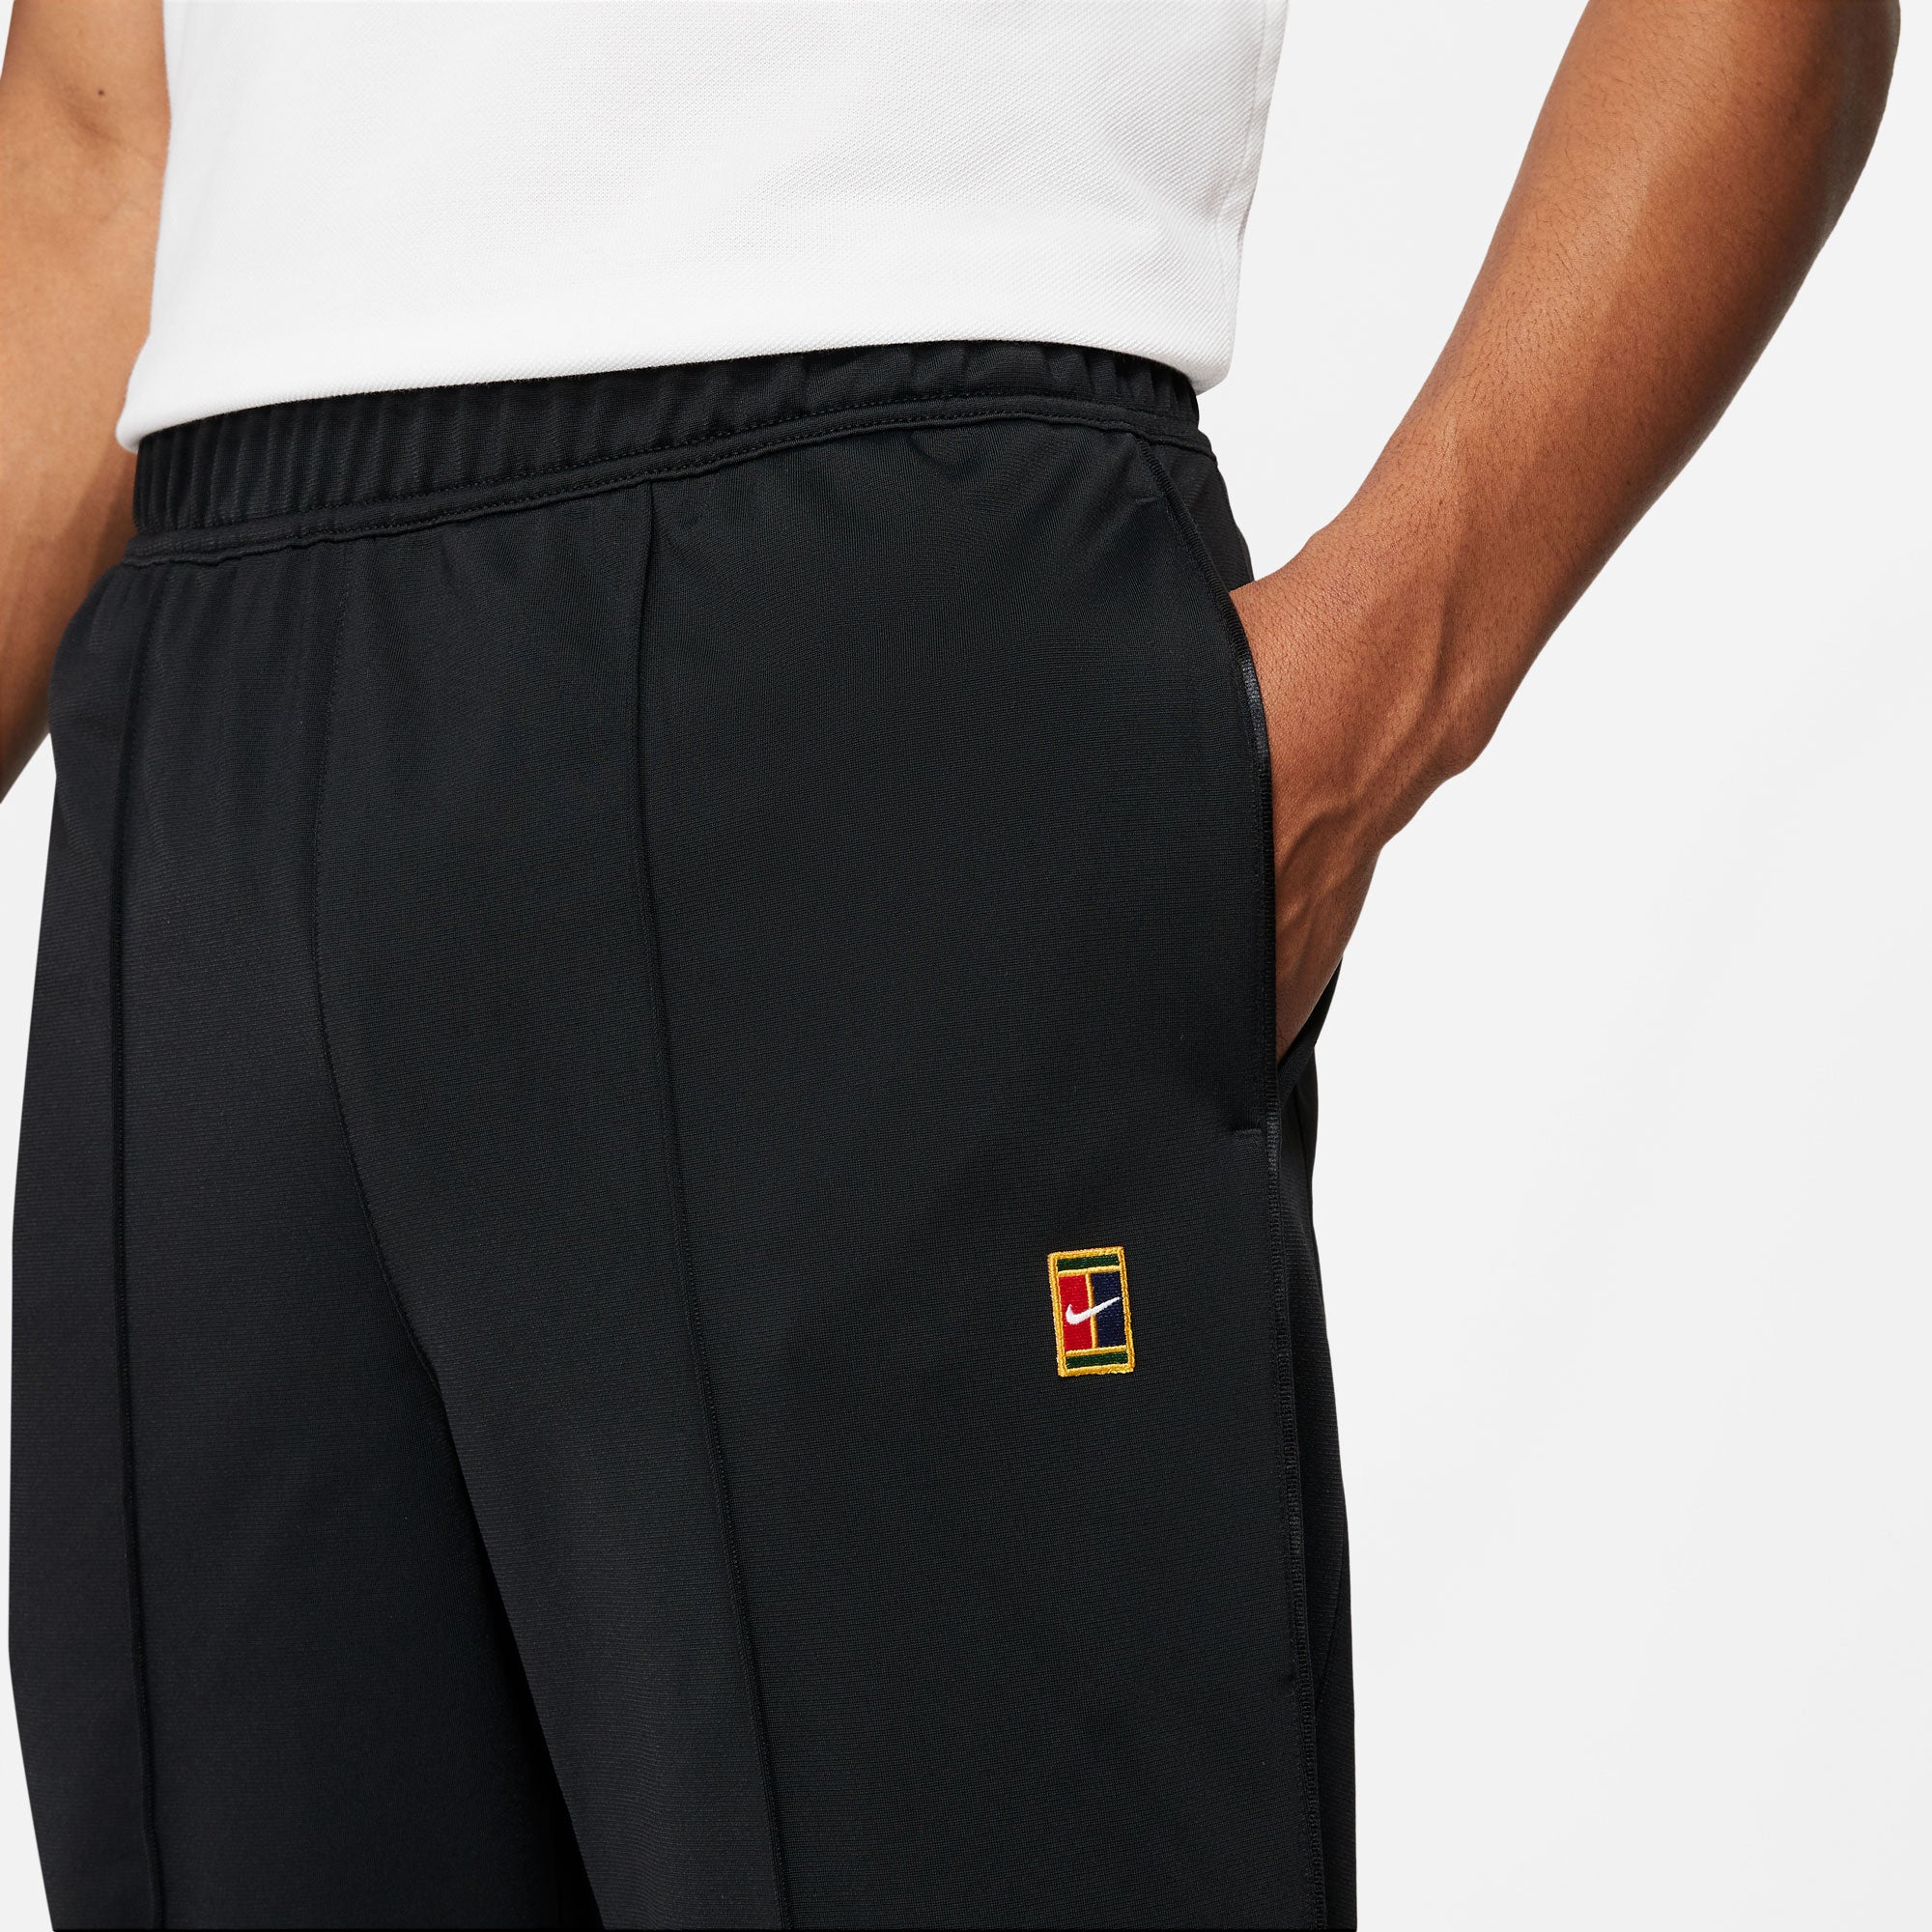 NikeCourt Heritage Men's Tennis Pants Black (4)